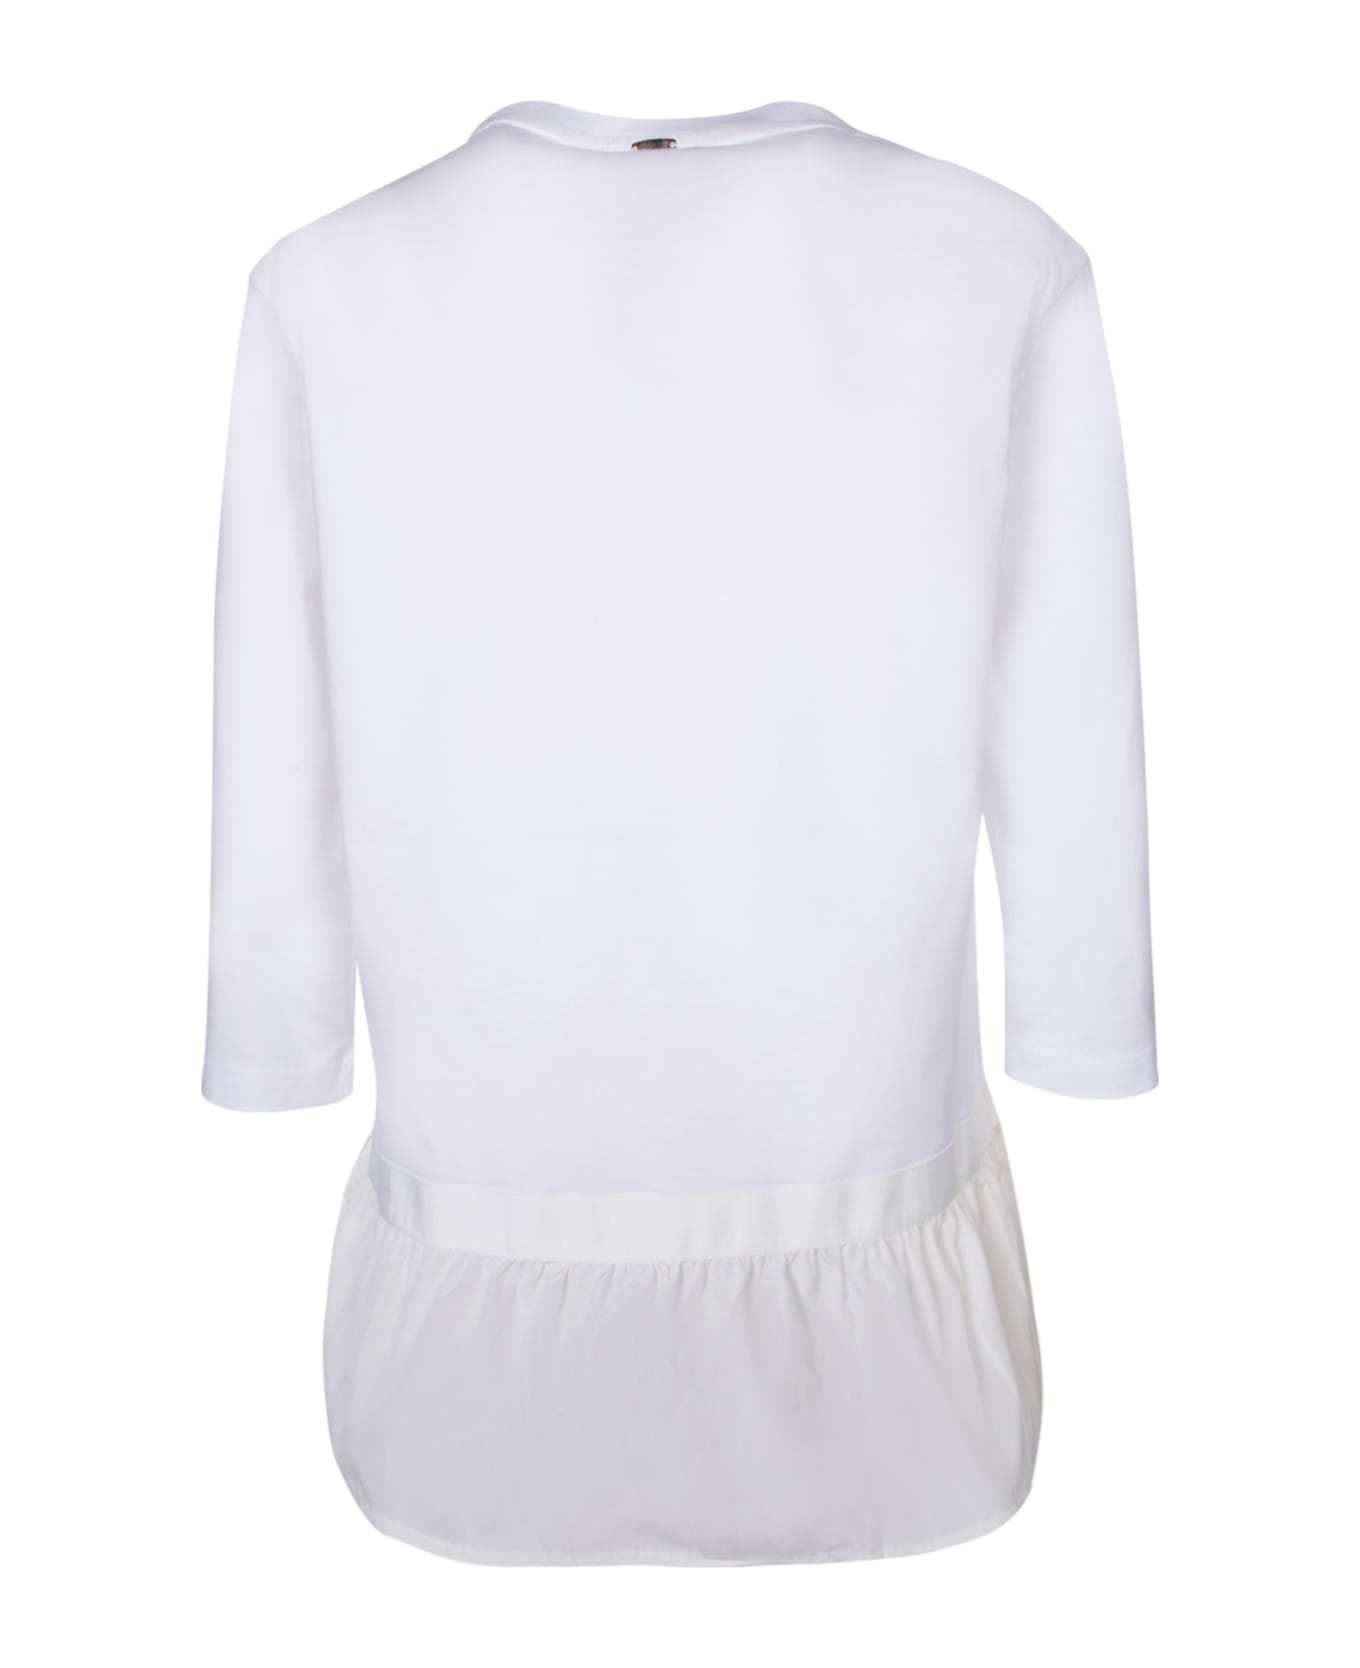 Herno Contrasting Details White T-shirt - White